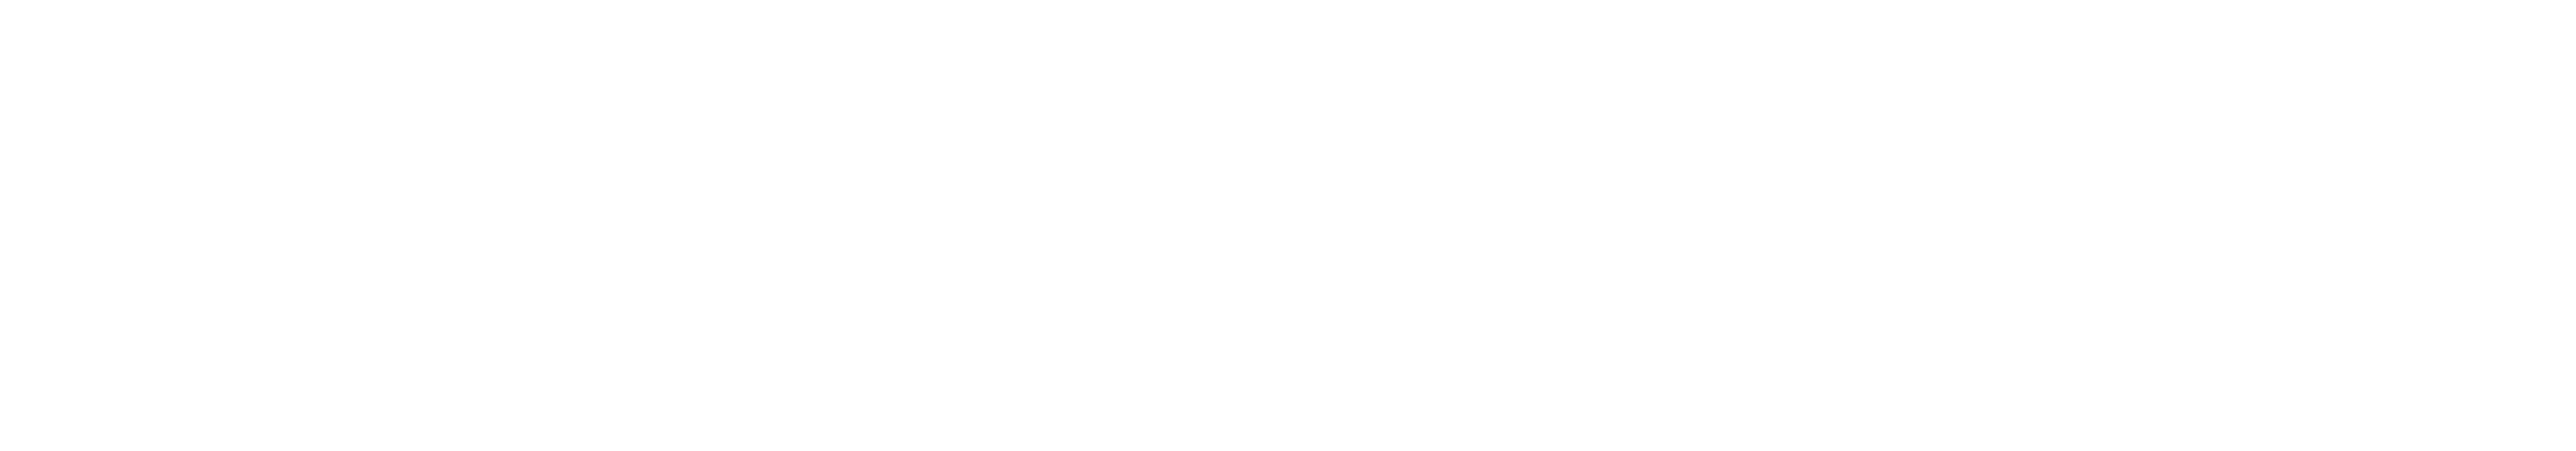 SEEPOINT logo